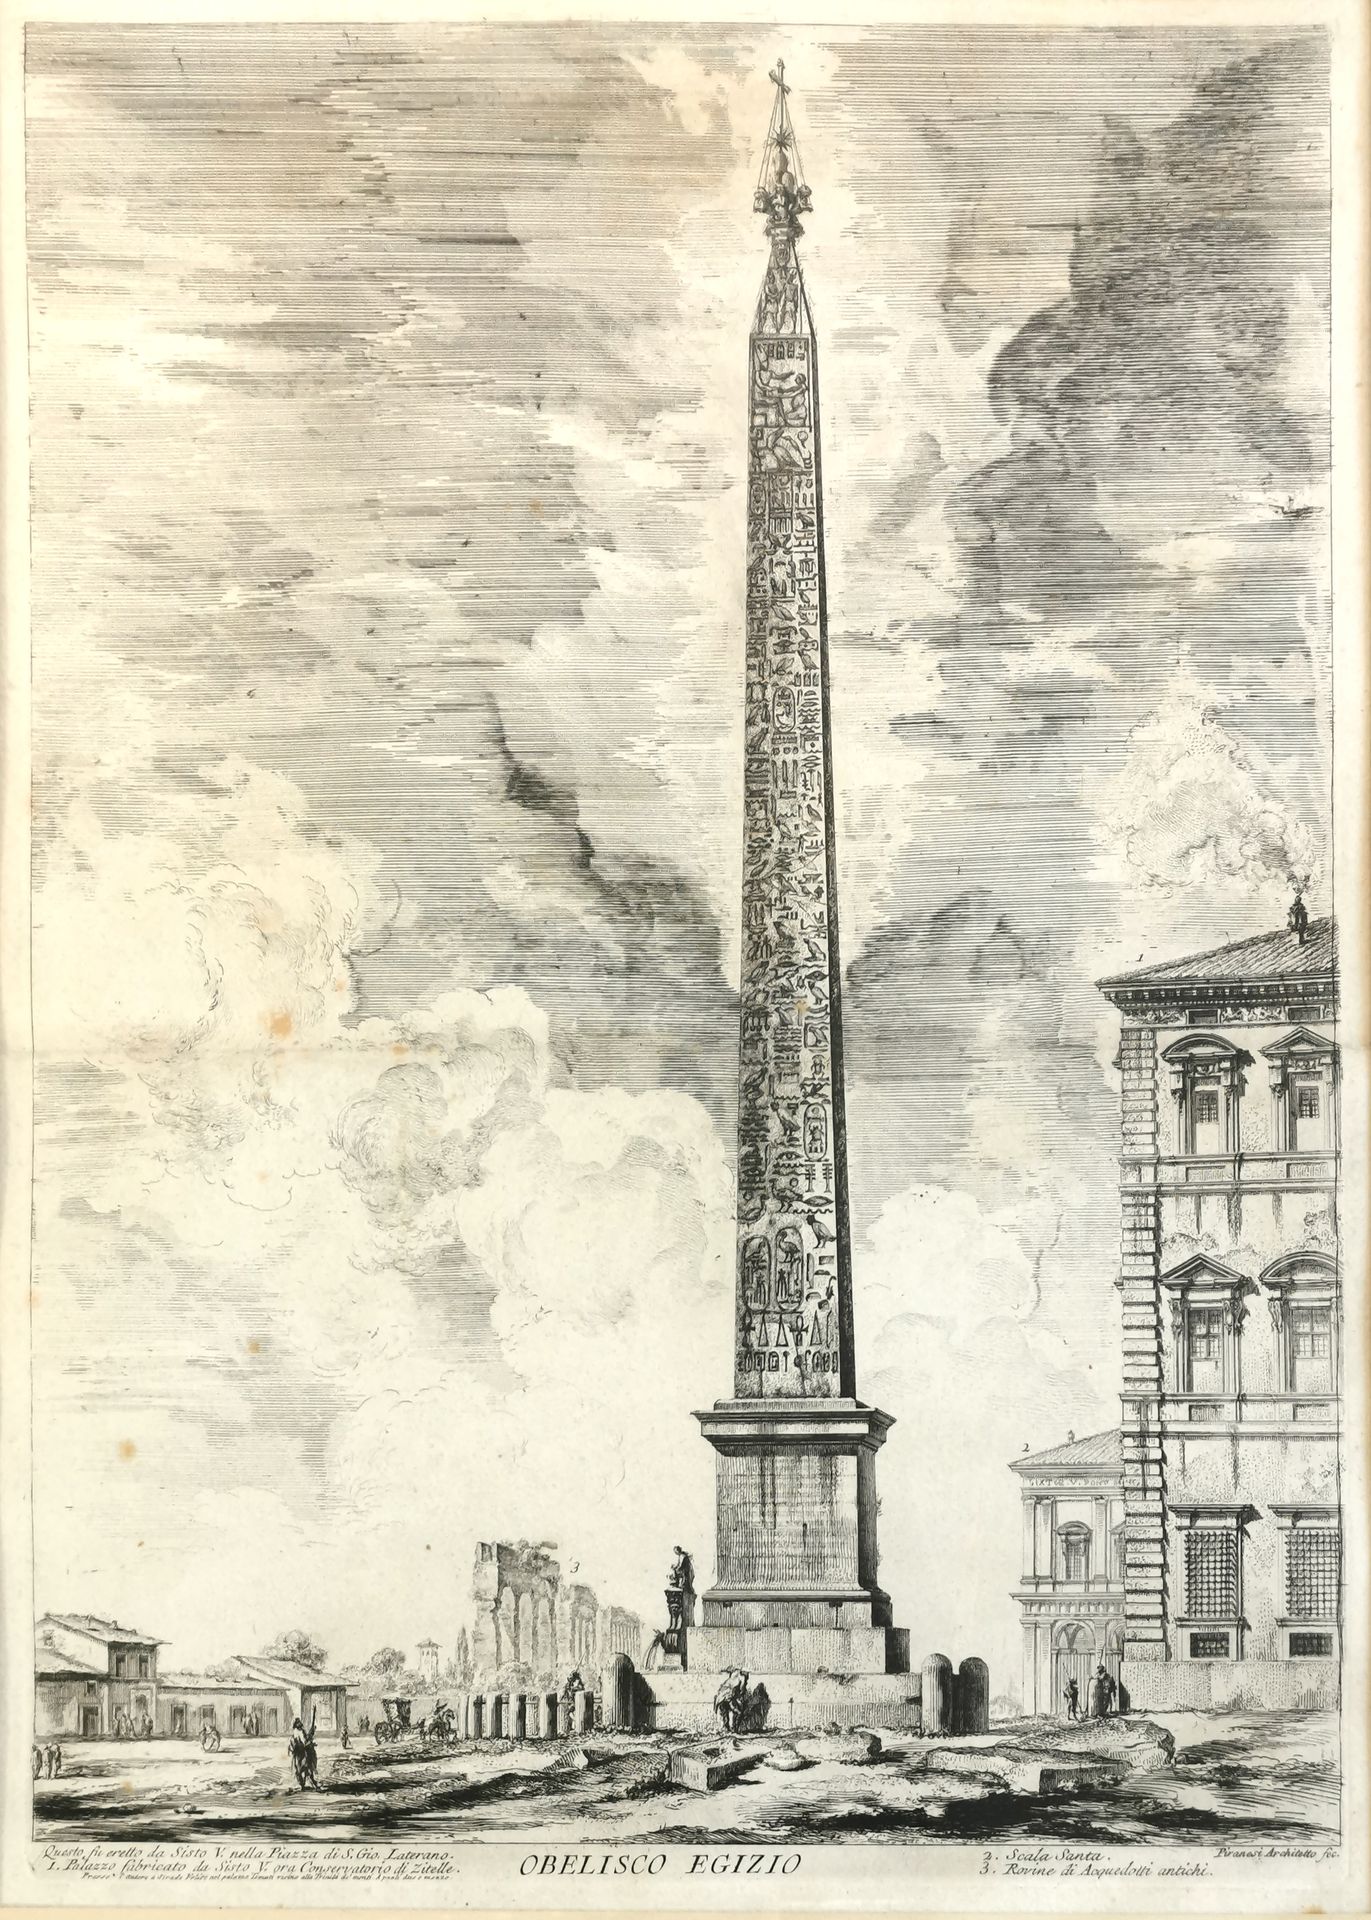 Null Giovanni Battista PIRANESI (1720-1778)

Obelisco Egizio

Etching captioned &hellip;